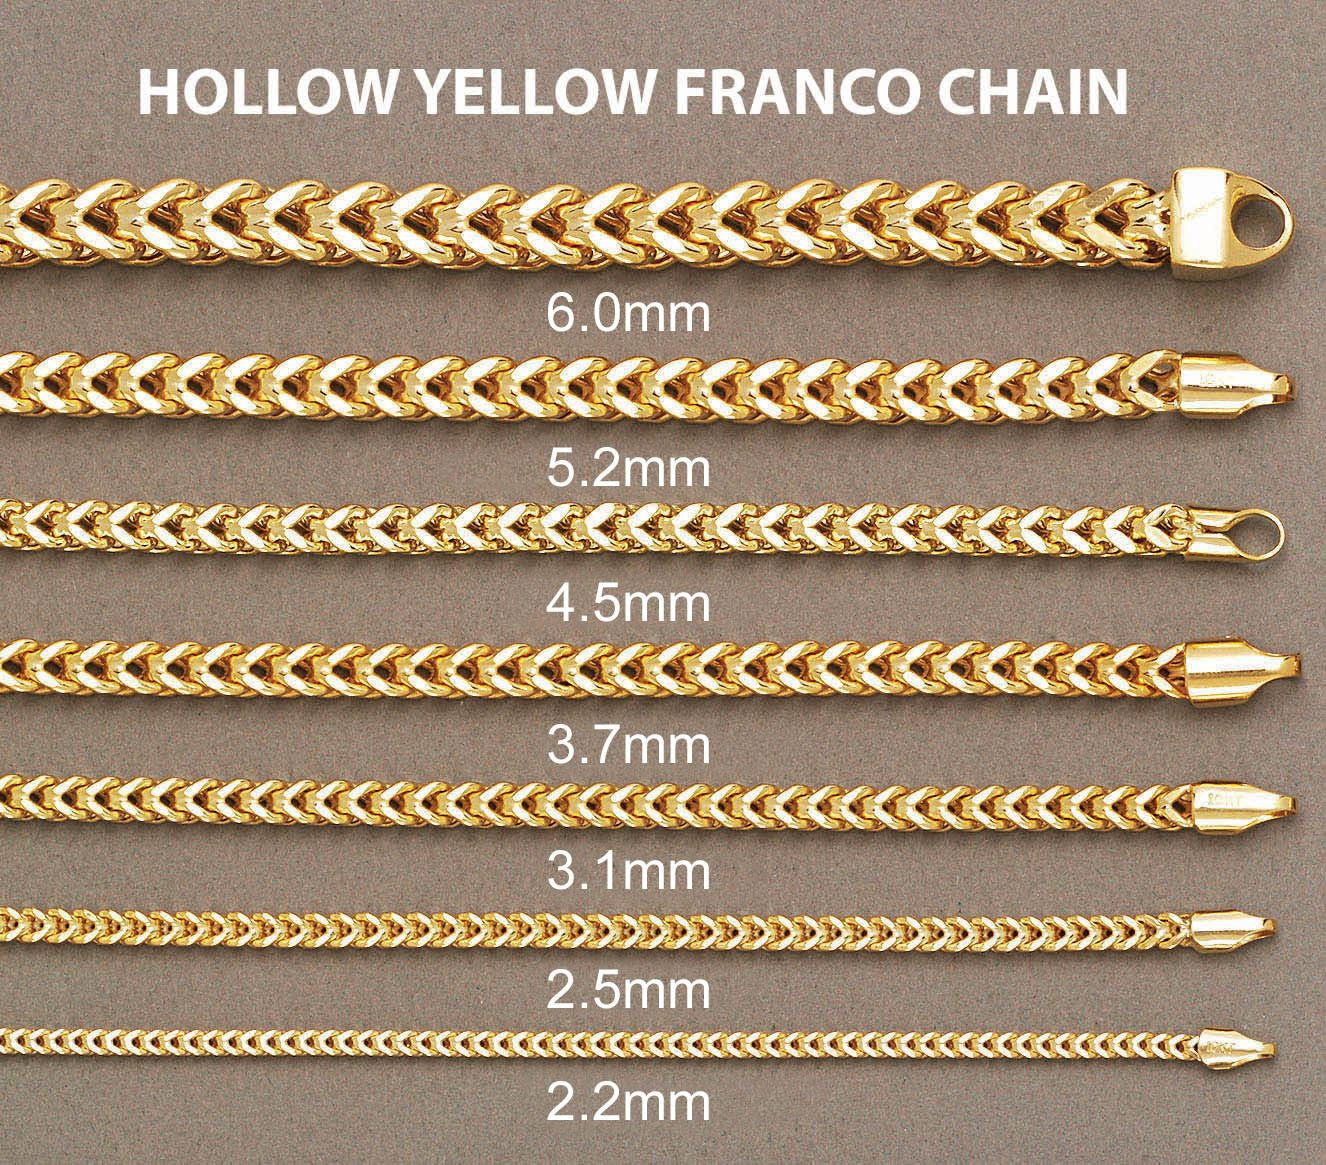 10k Yellow Hollow Franco Chain